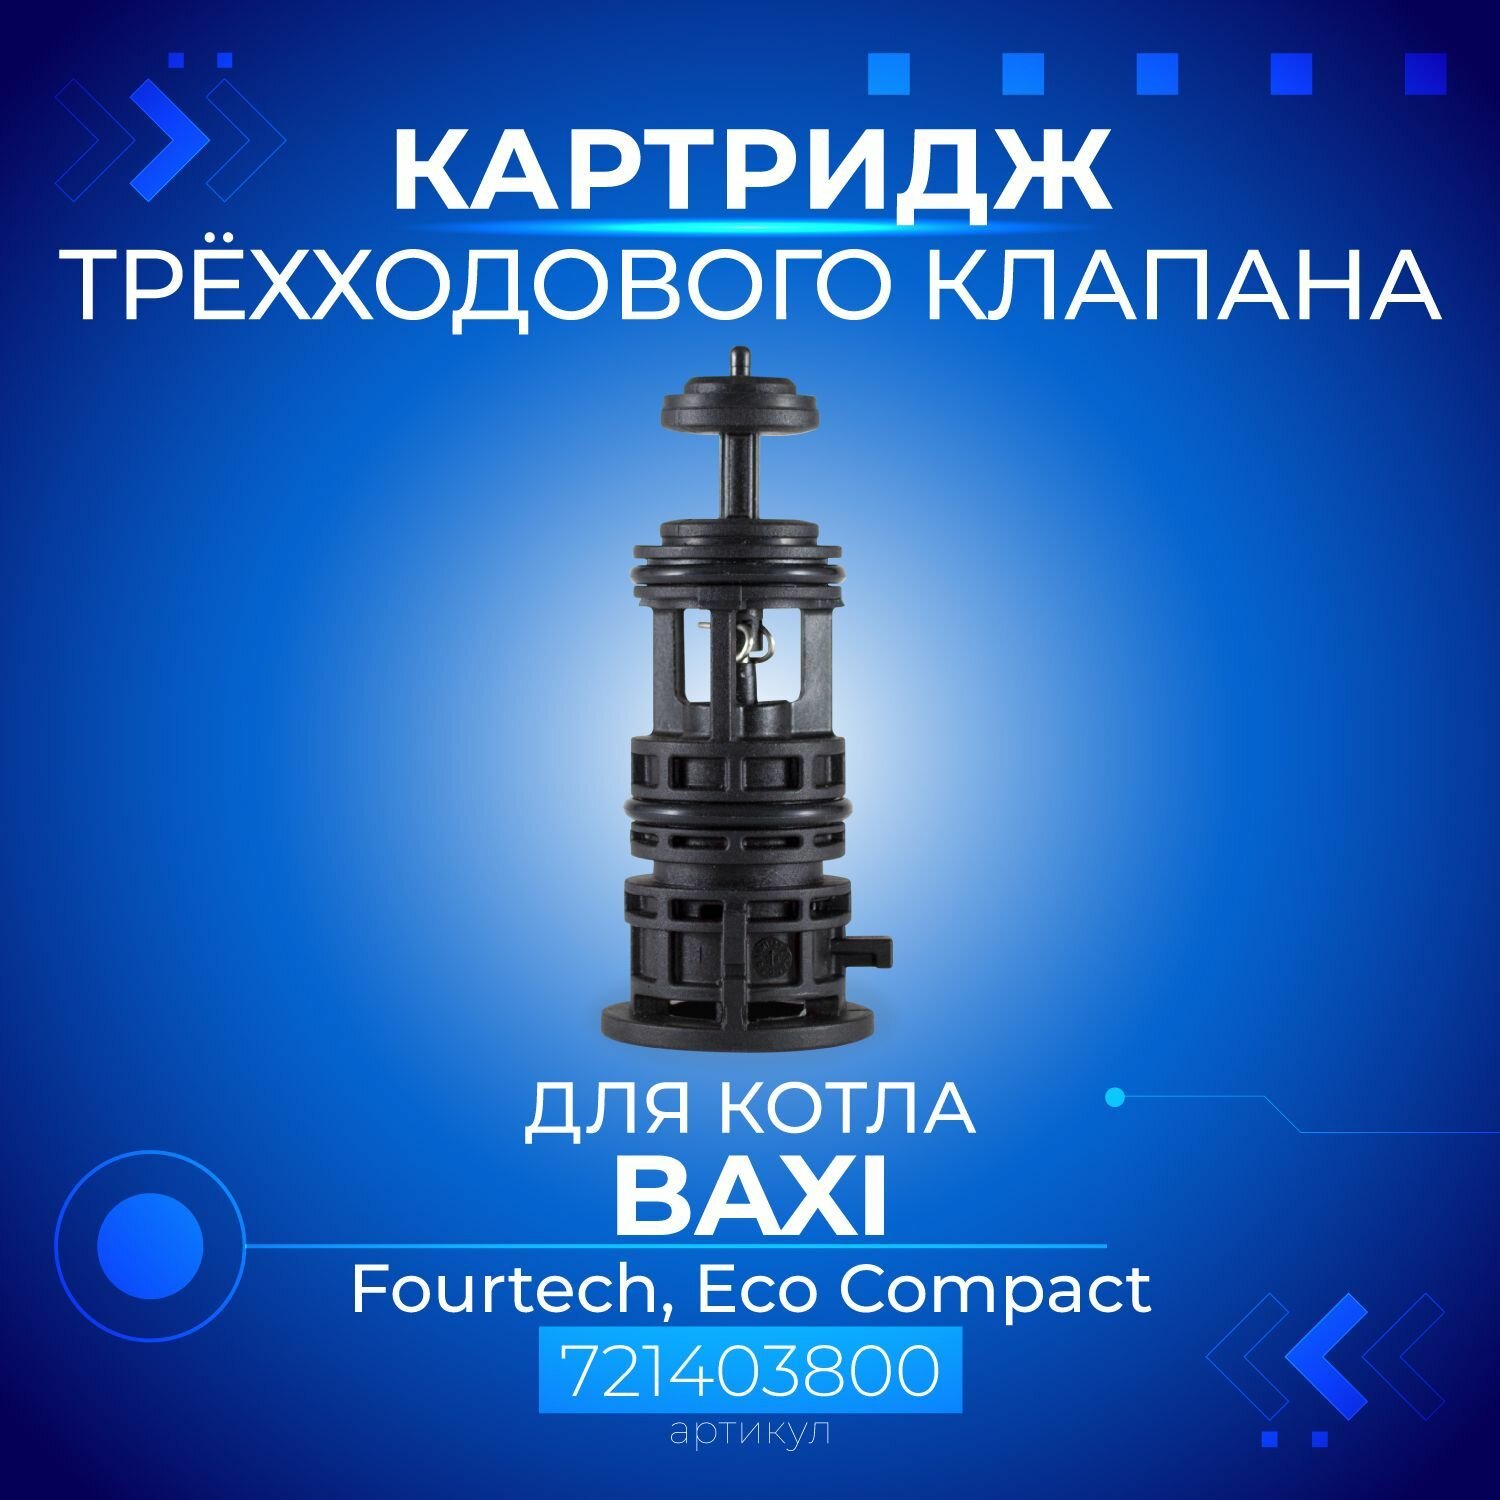 Картридж 3-х ходового клапана для котла BAXI Fourtech Eco Compact артикул 721403800